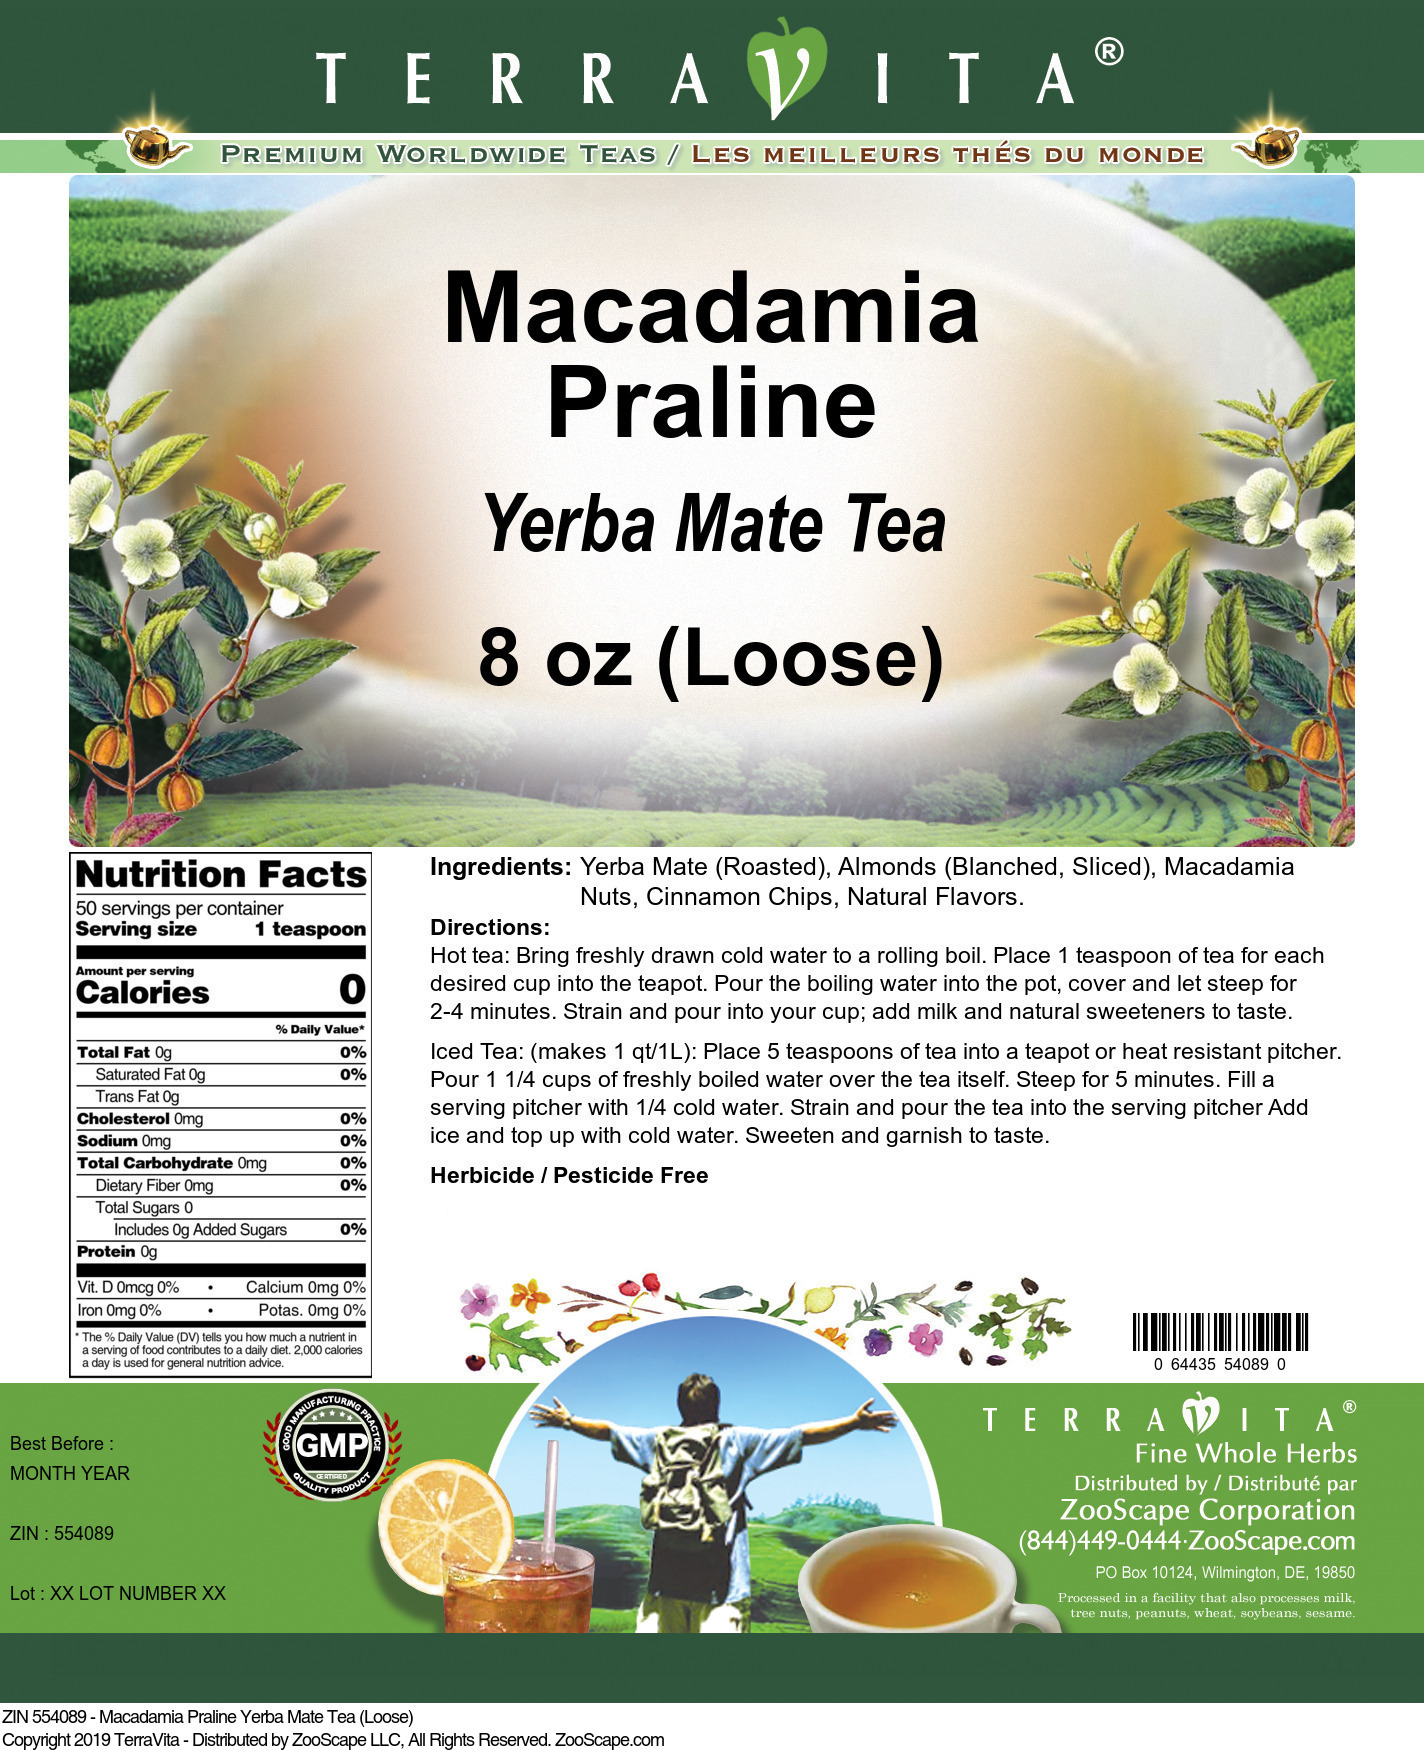 Macadamia Praline Yerba Mate Tea (Loose) - Label